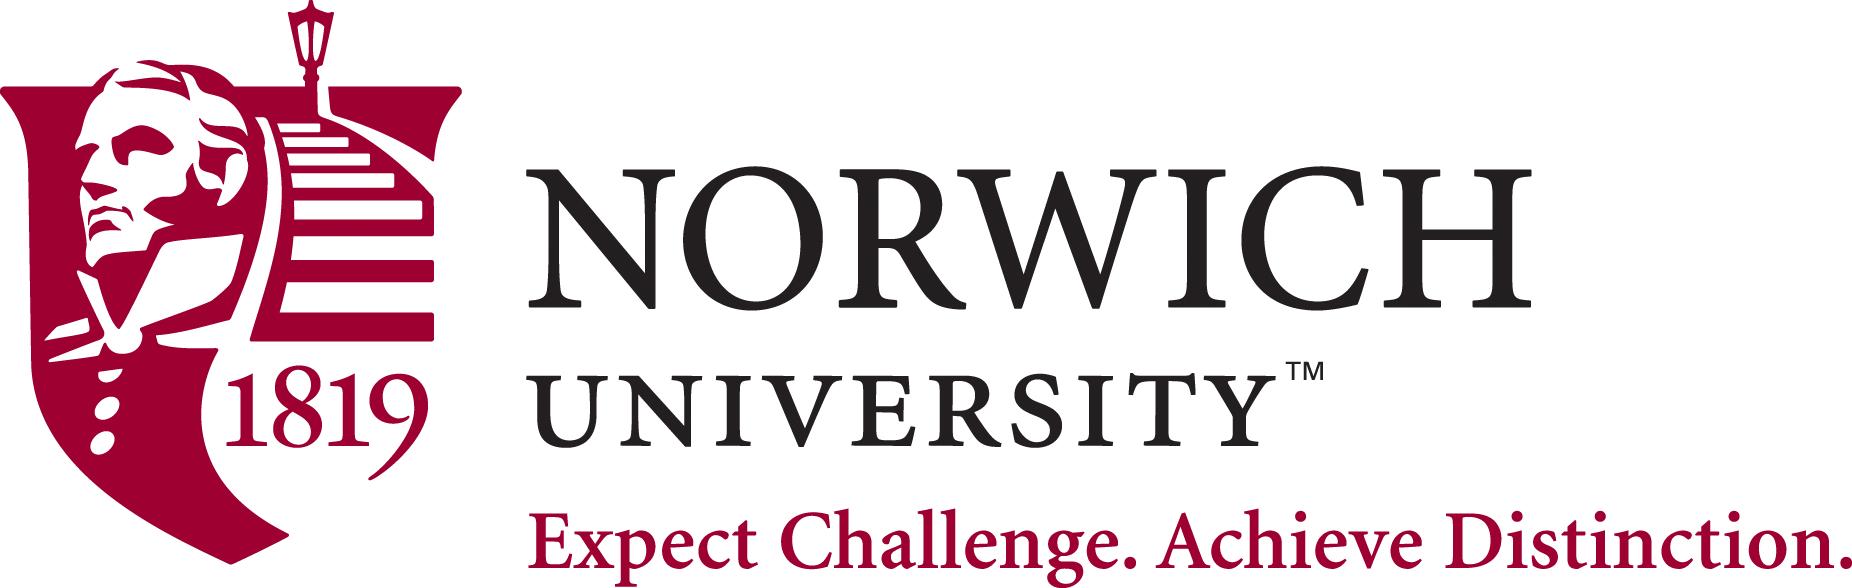 Norwich University 